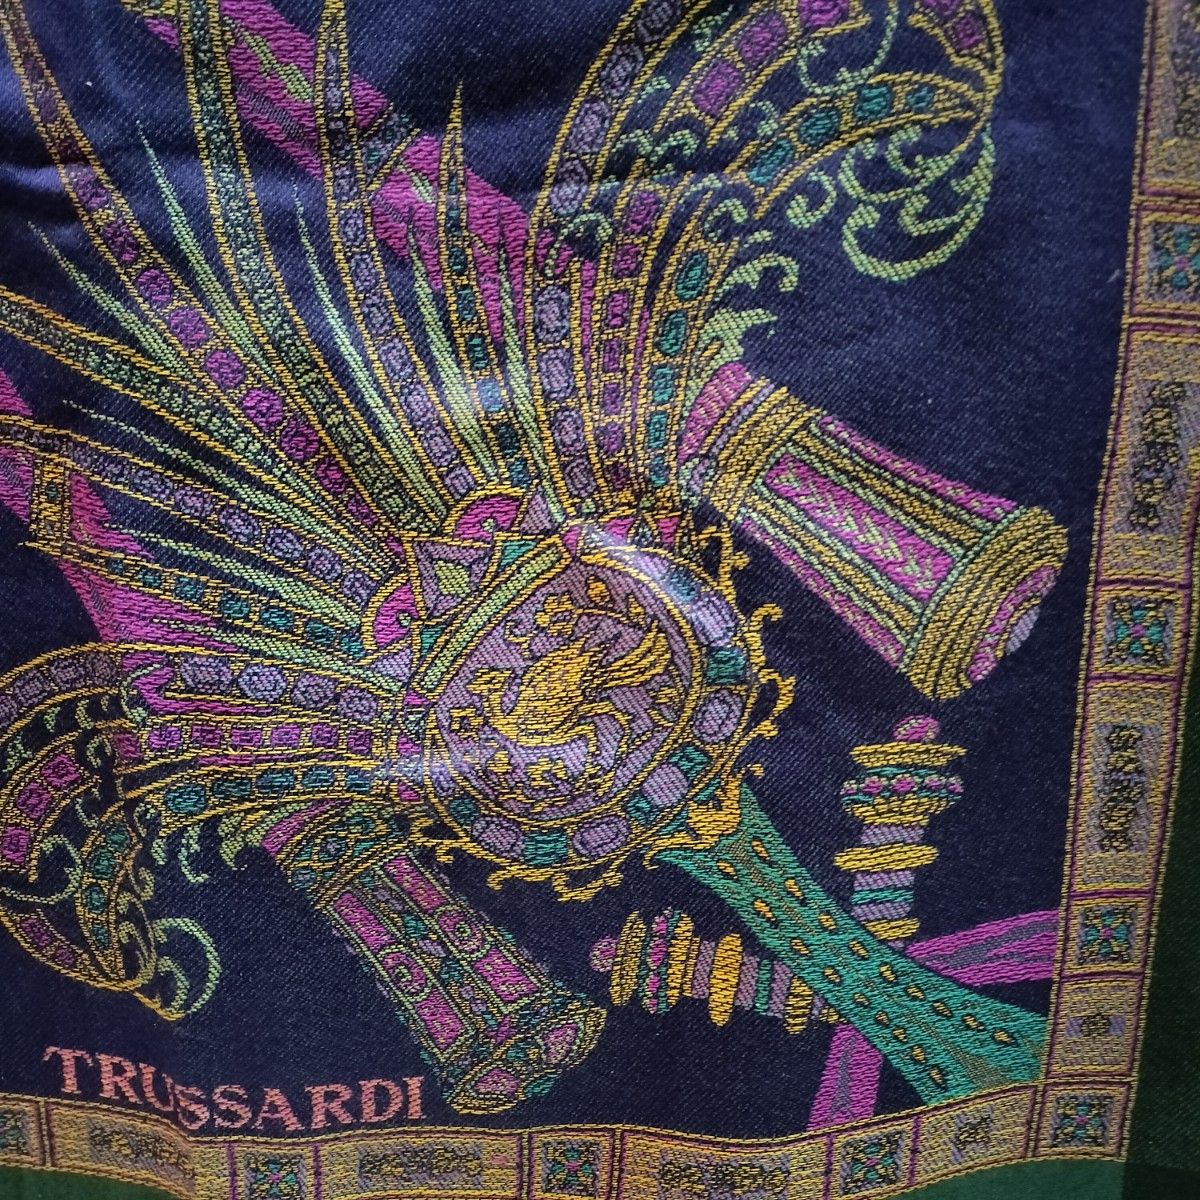 TRUSSARDIトラサルディ大判スカーフ 絹シルク 135cm…135cm  ストール  ショール